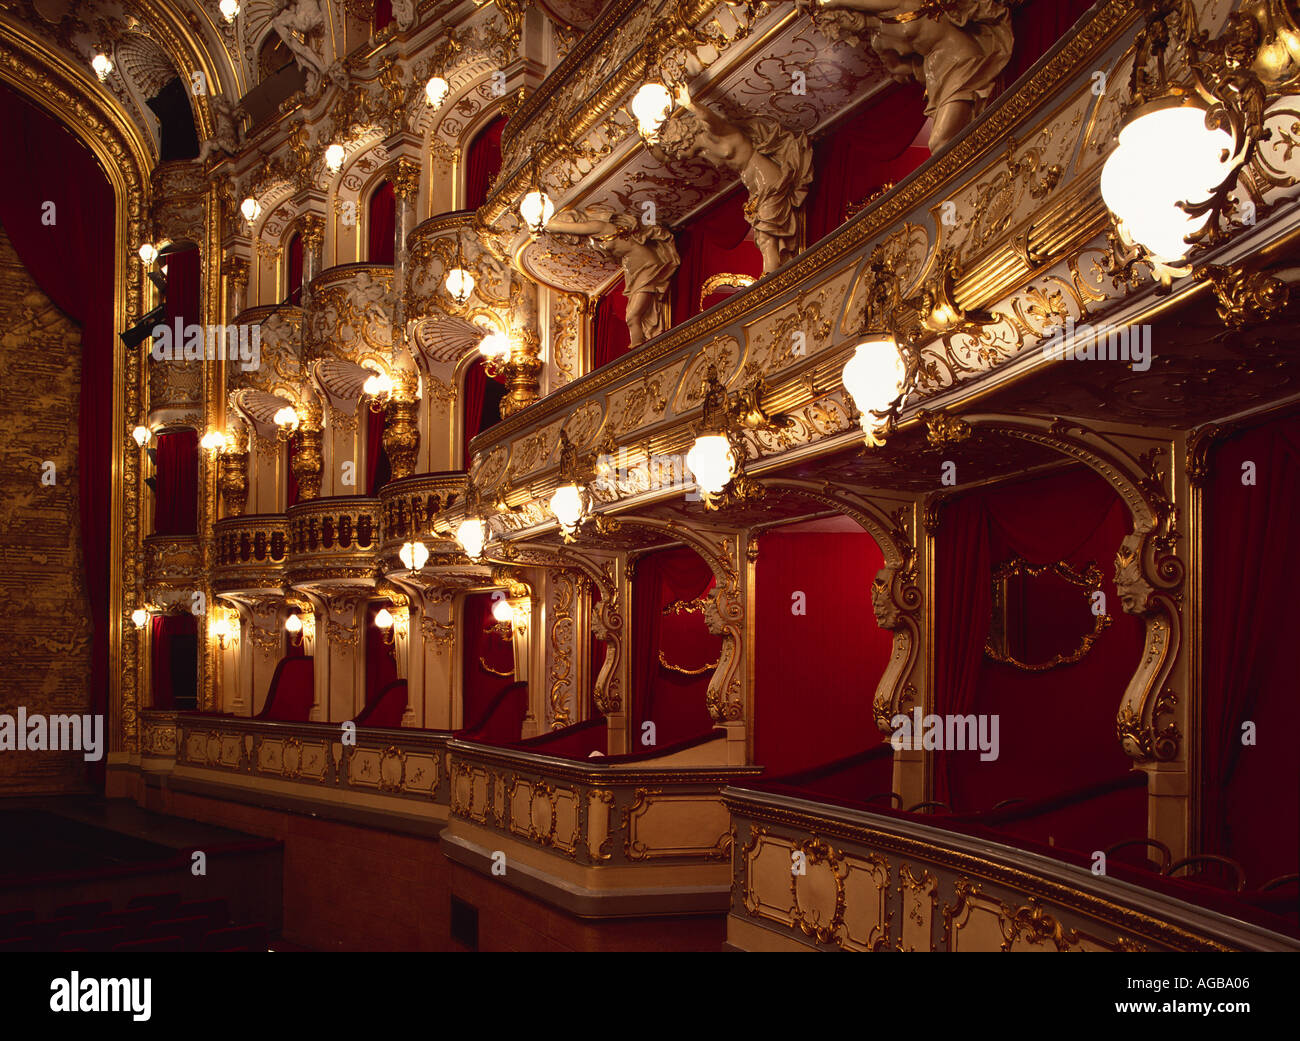 Praga all'interno del neo rococò Teatro Smetana Foto stock - Alamy